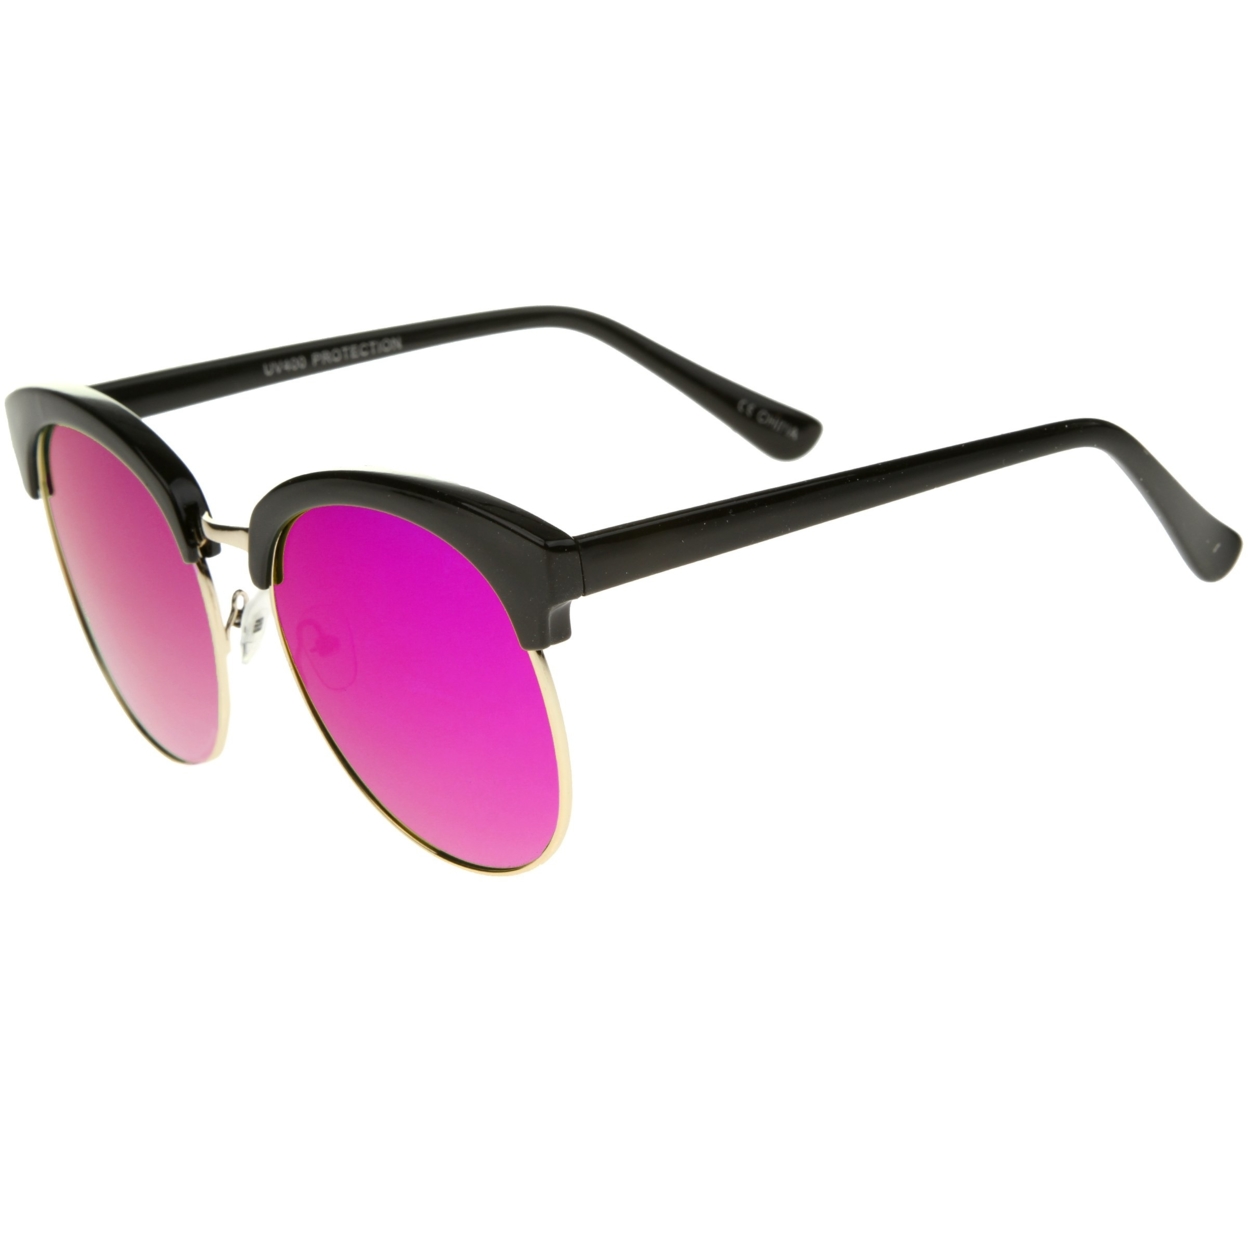 Womens Oversize Half-Frame Mirrored Flat Lens Round Sunglasses 68mm - Tortoise-Gold / Orange Mirror